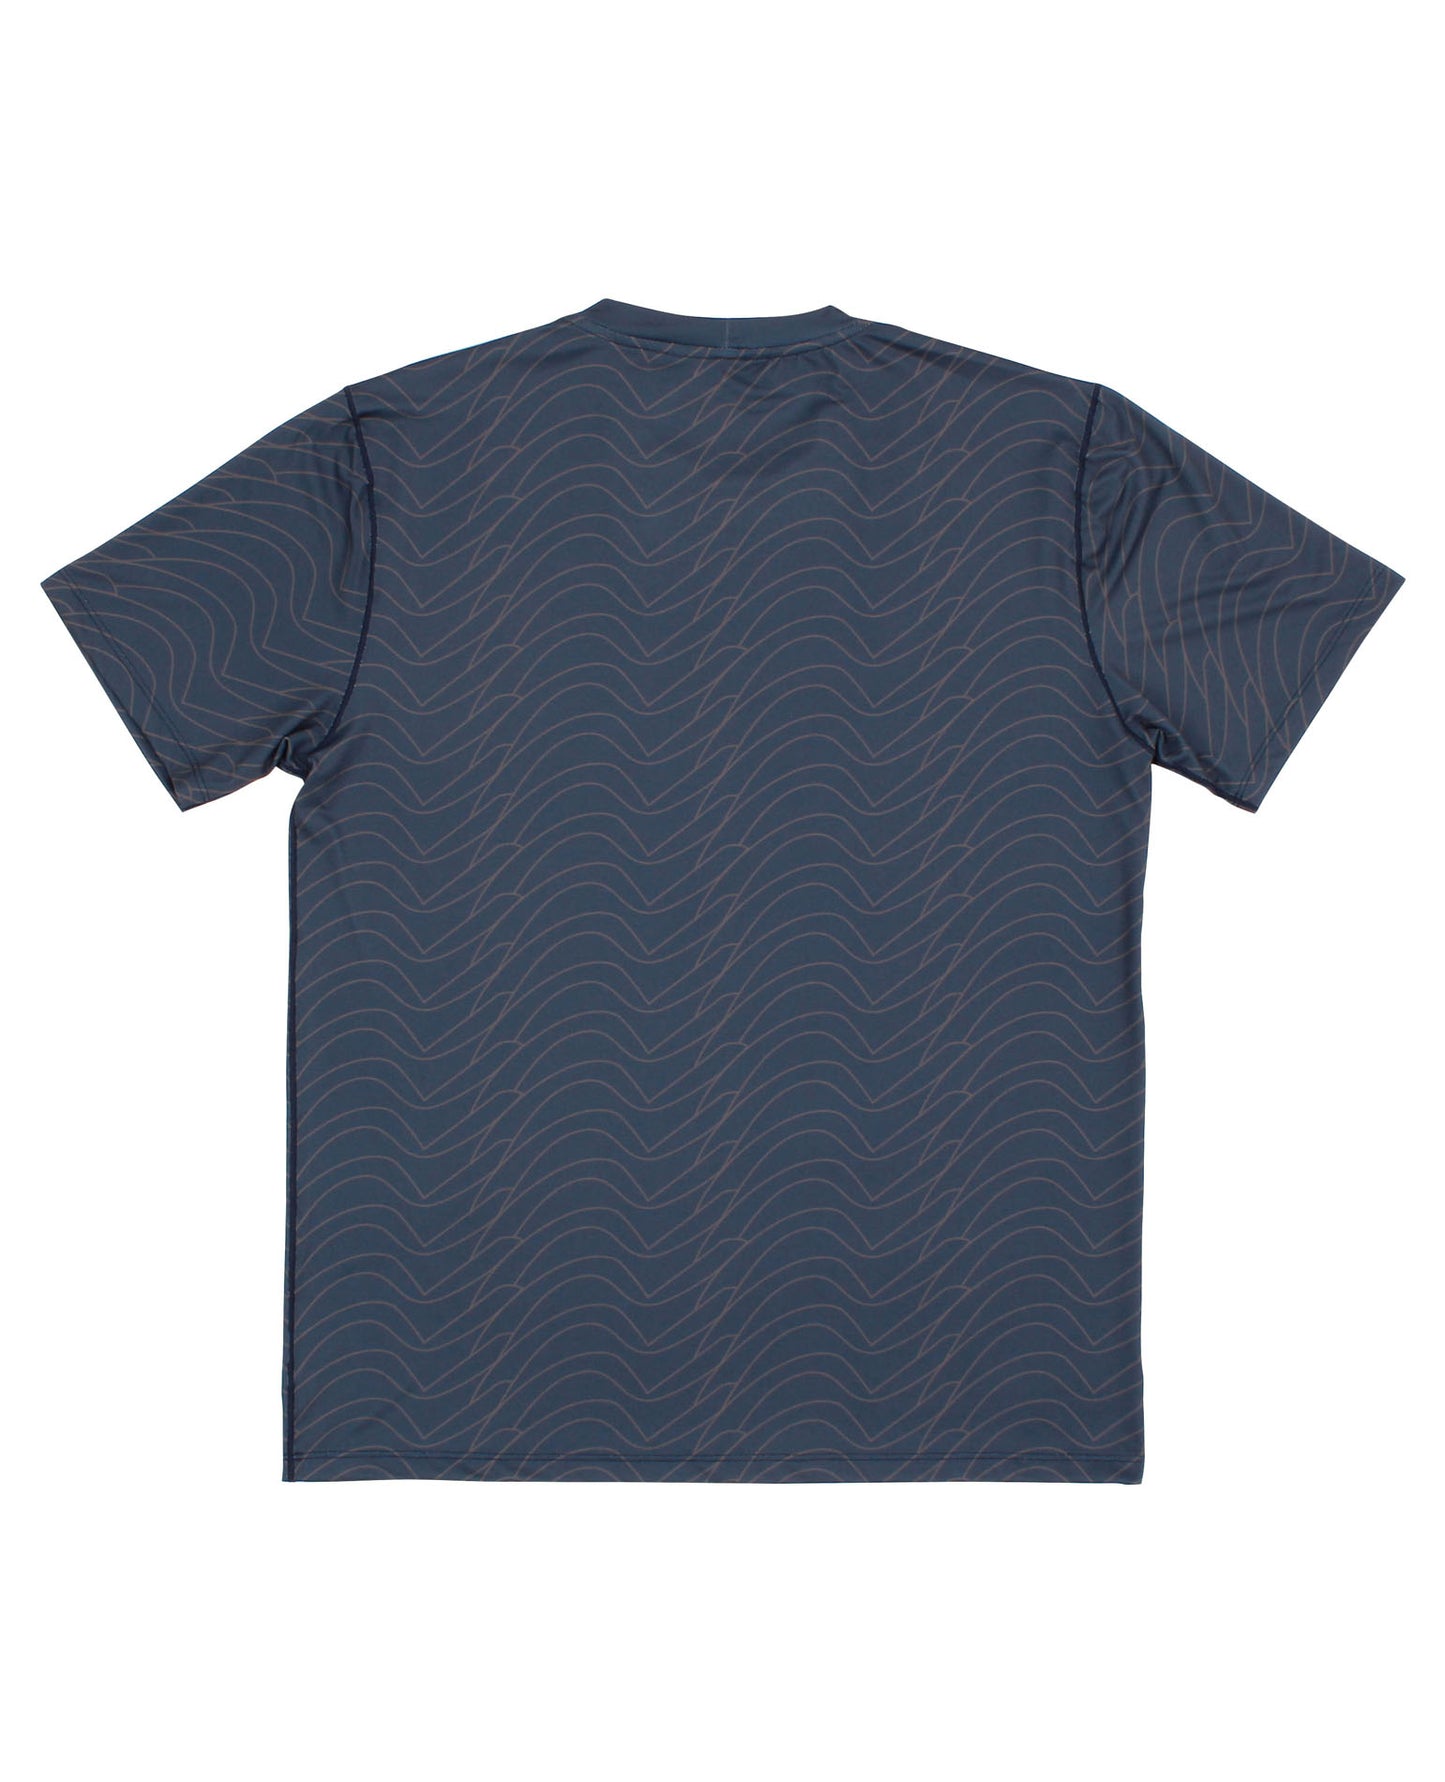 Undulate Repeated-Pattern Graphic T-Shirt